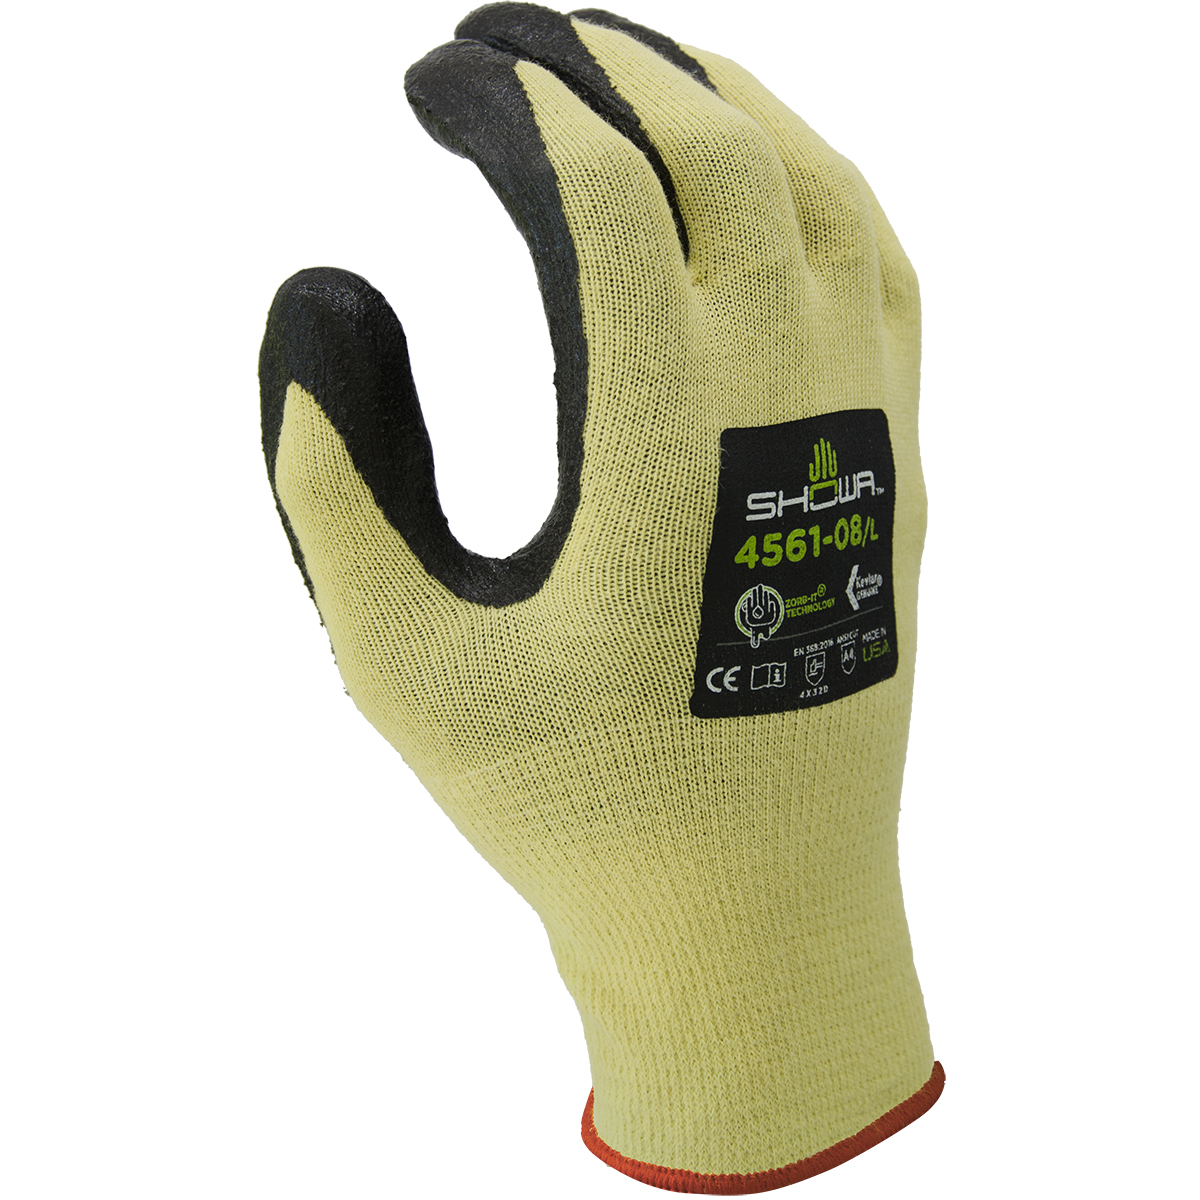 Cut resistant, sponge nitrile palm w/Zorb-IT technology, 15 gauge seamless knit made Kevlar®, yellow w/black dip,  ANSI CUT LEVEL A4/extra large